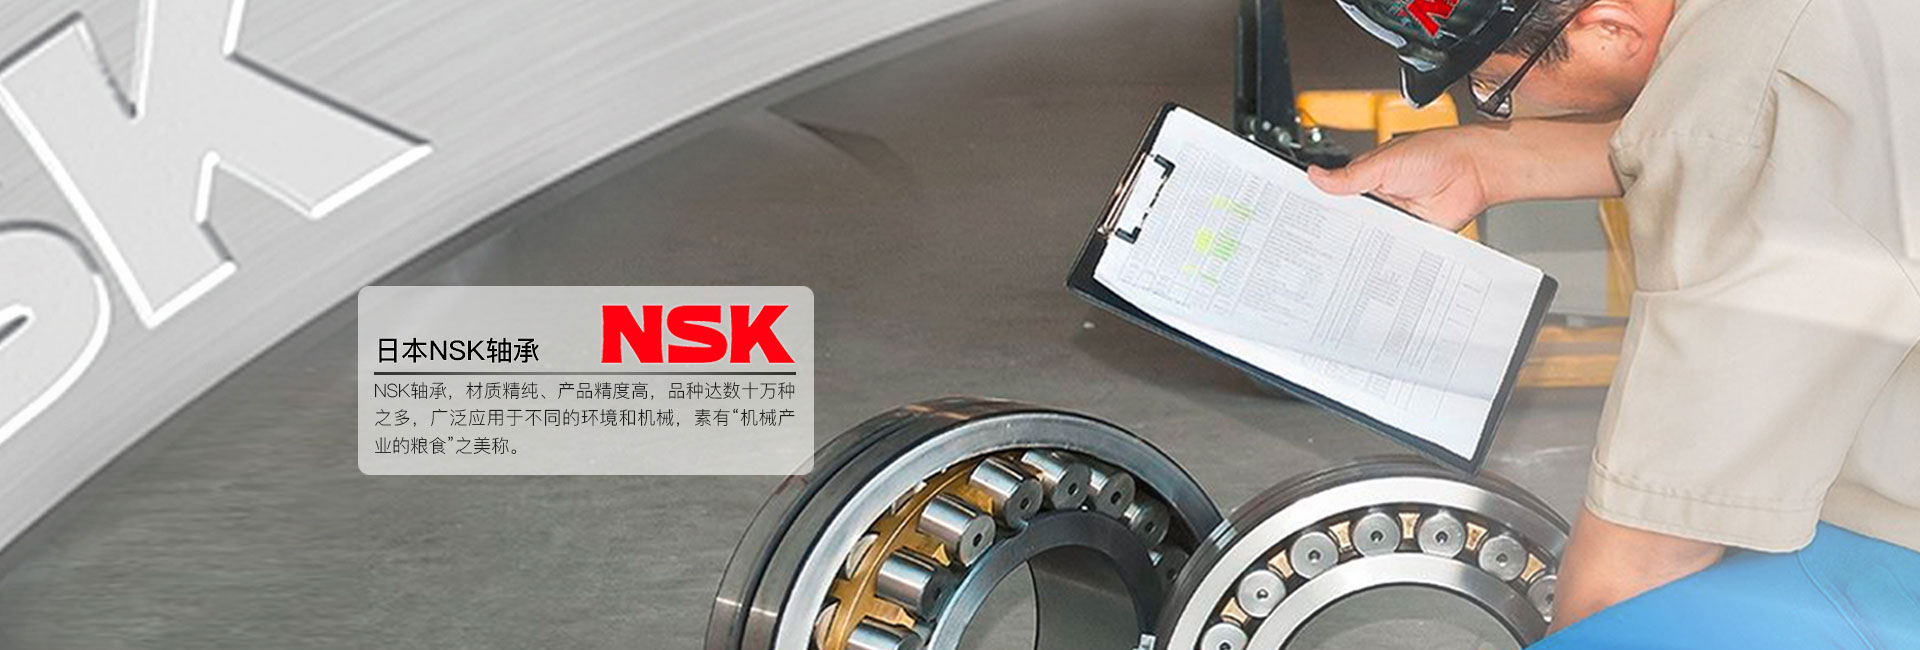 NSK轴承,NSK进口轴承,NSK轴承官网